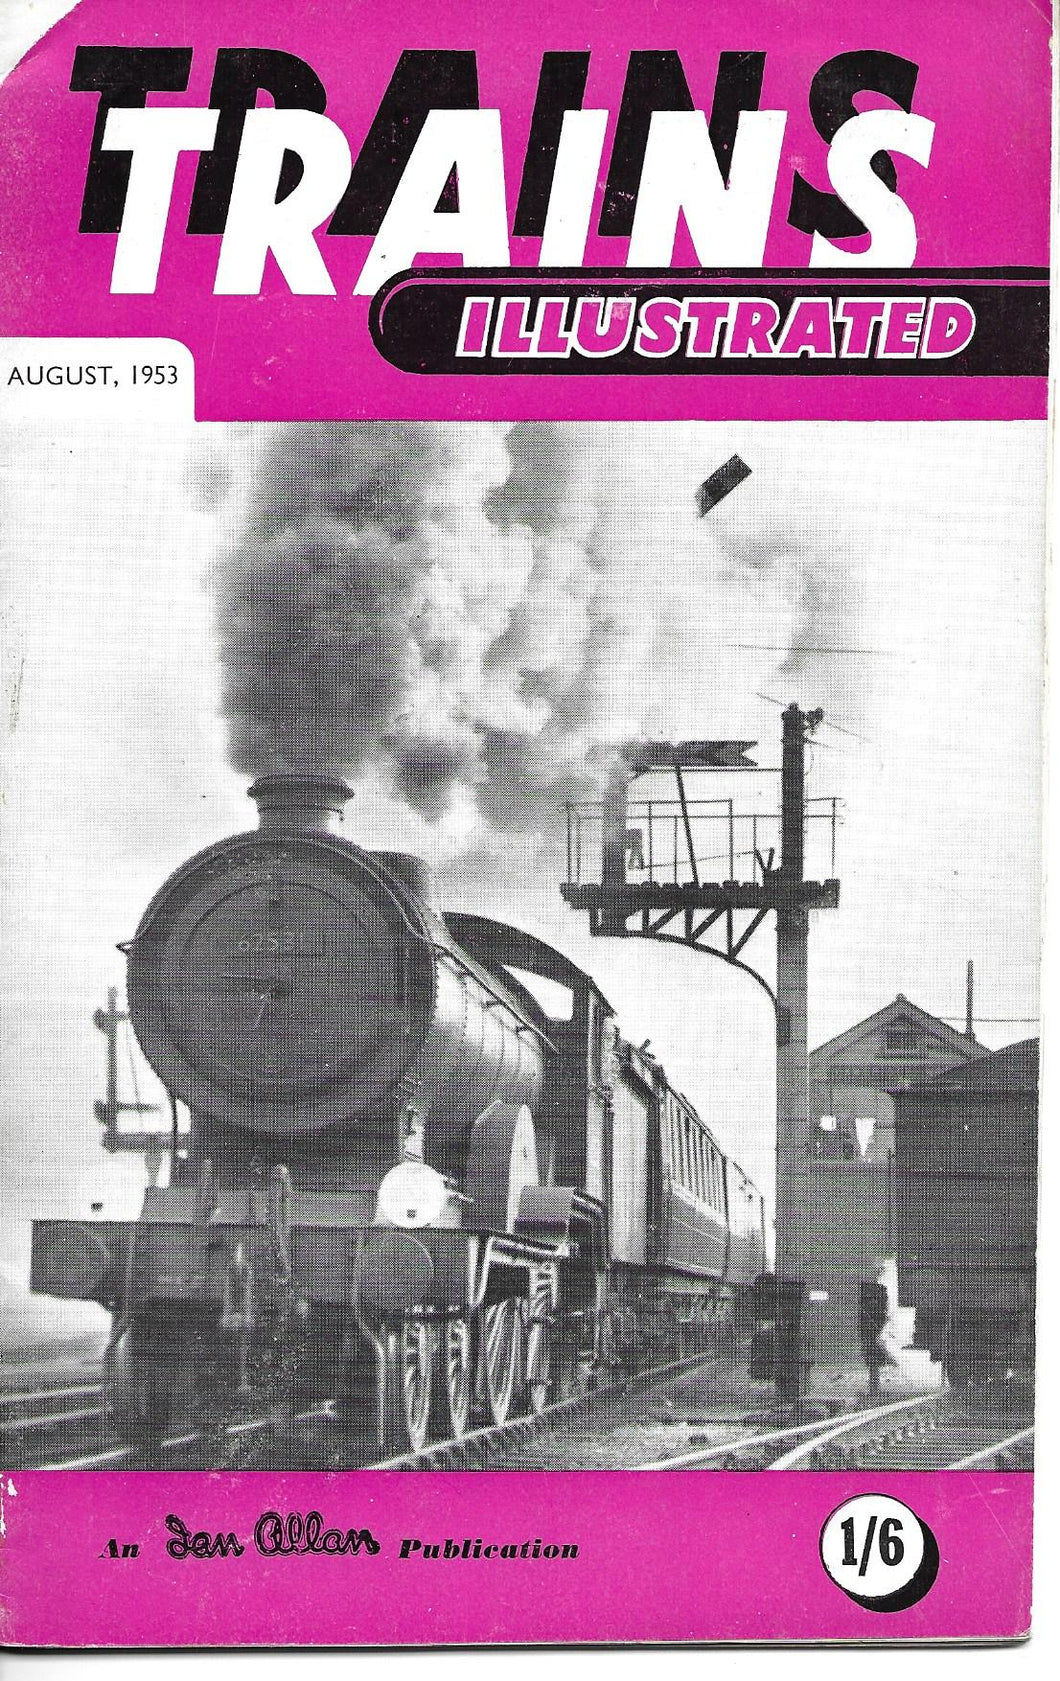 Trains Illustrated, Ian Allan, August 1953, Vol VI No 8